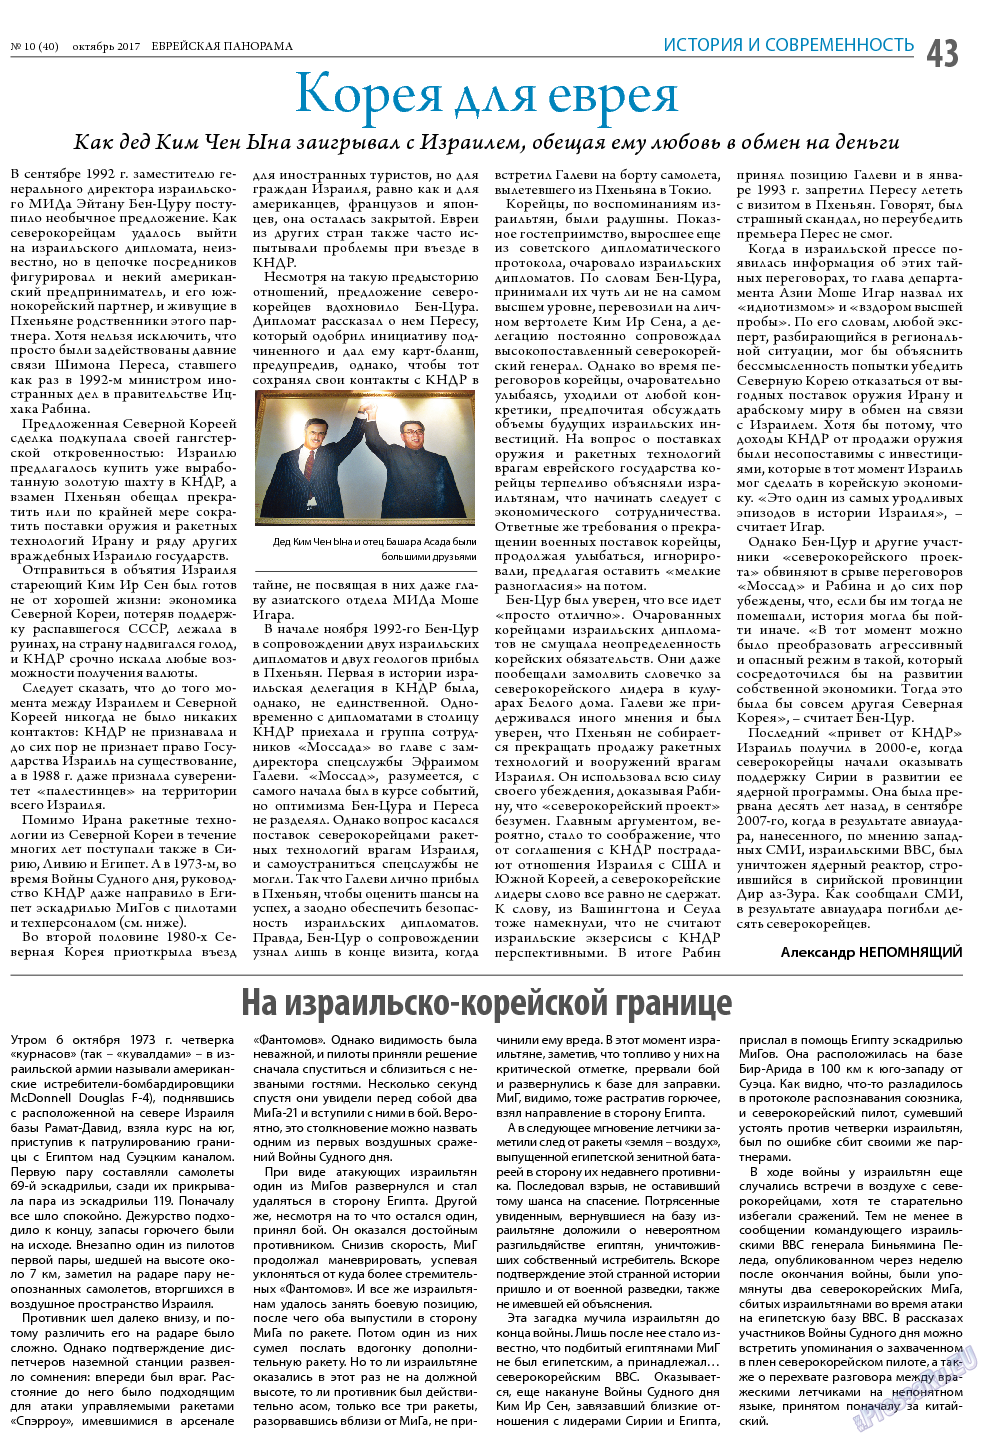 Еврейская панорама, газета. 2017 №10 стр.43